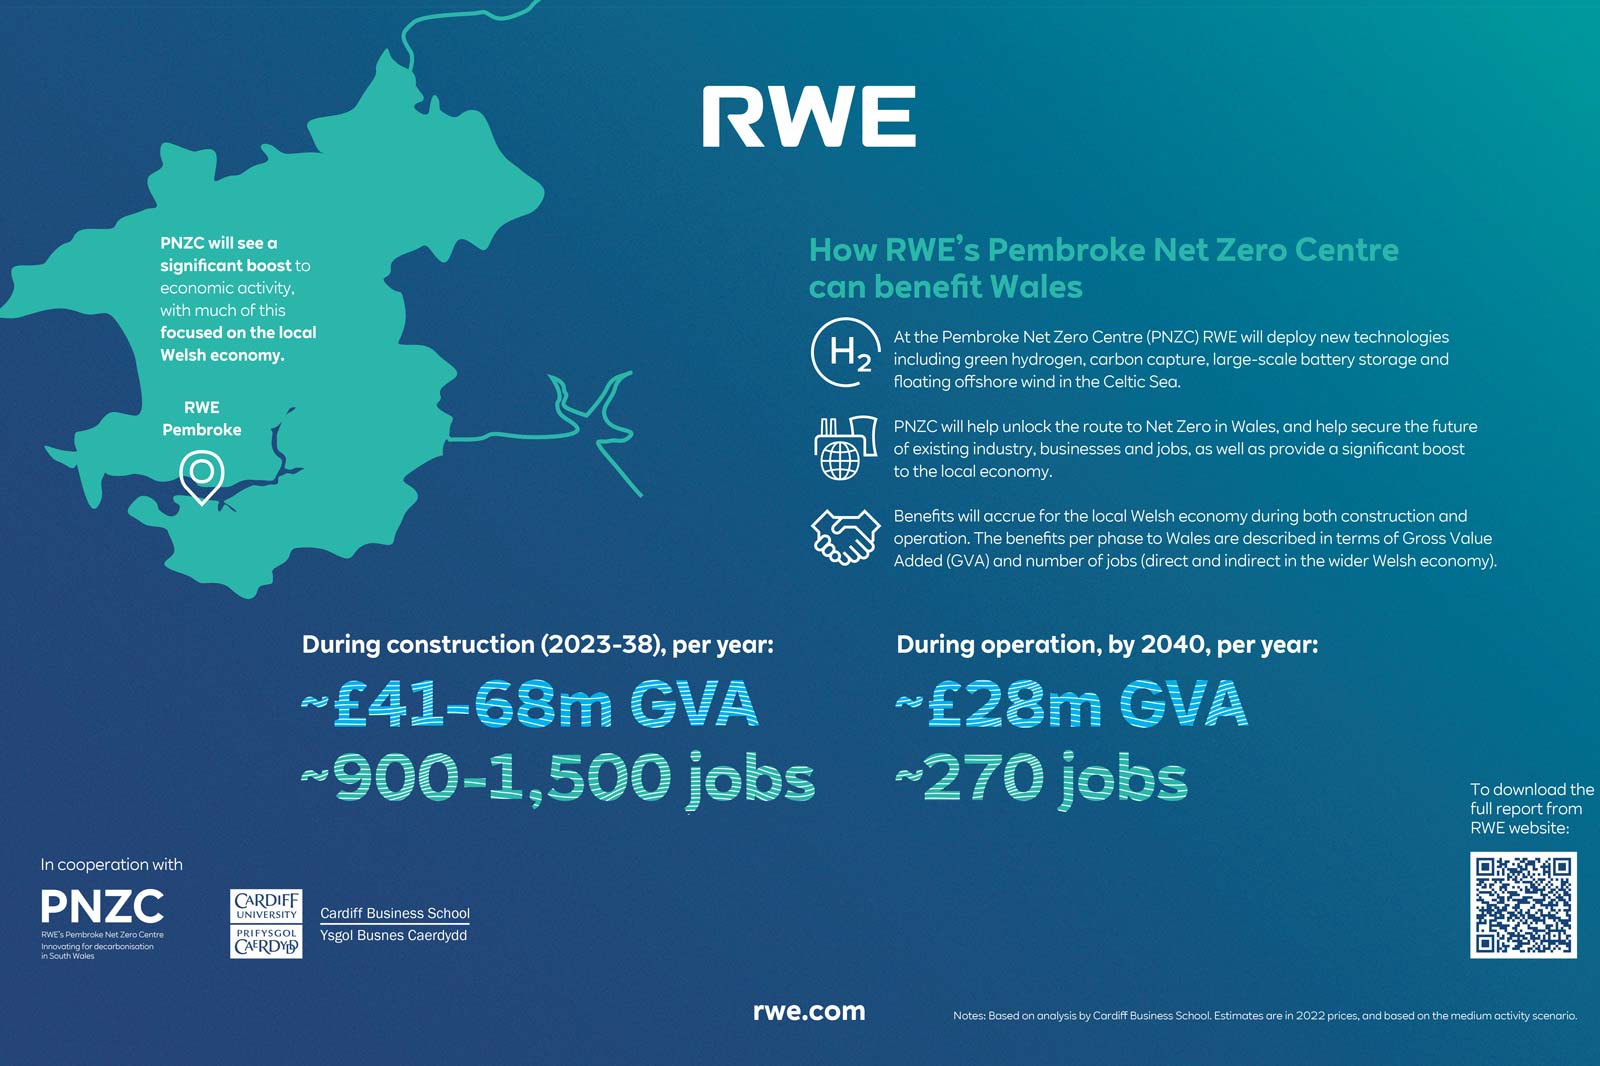 How RWE’s Pembroke Net Zero Centre can benefit Wales